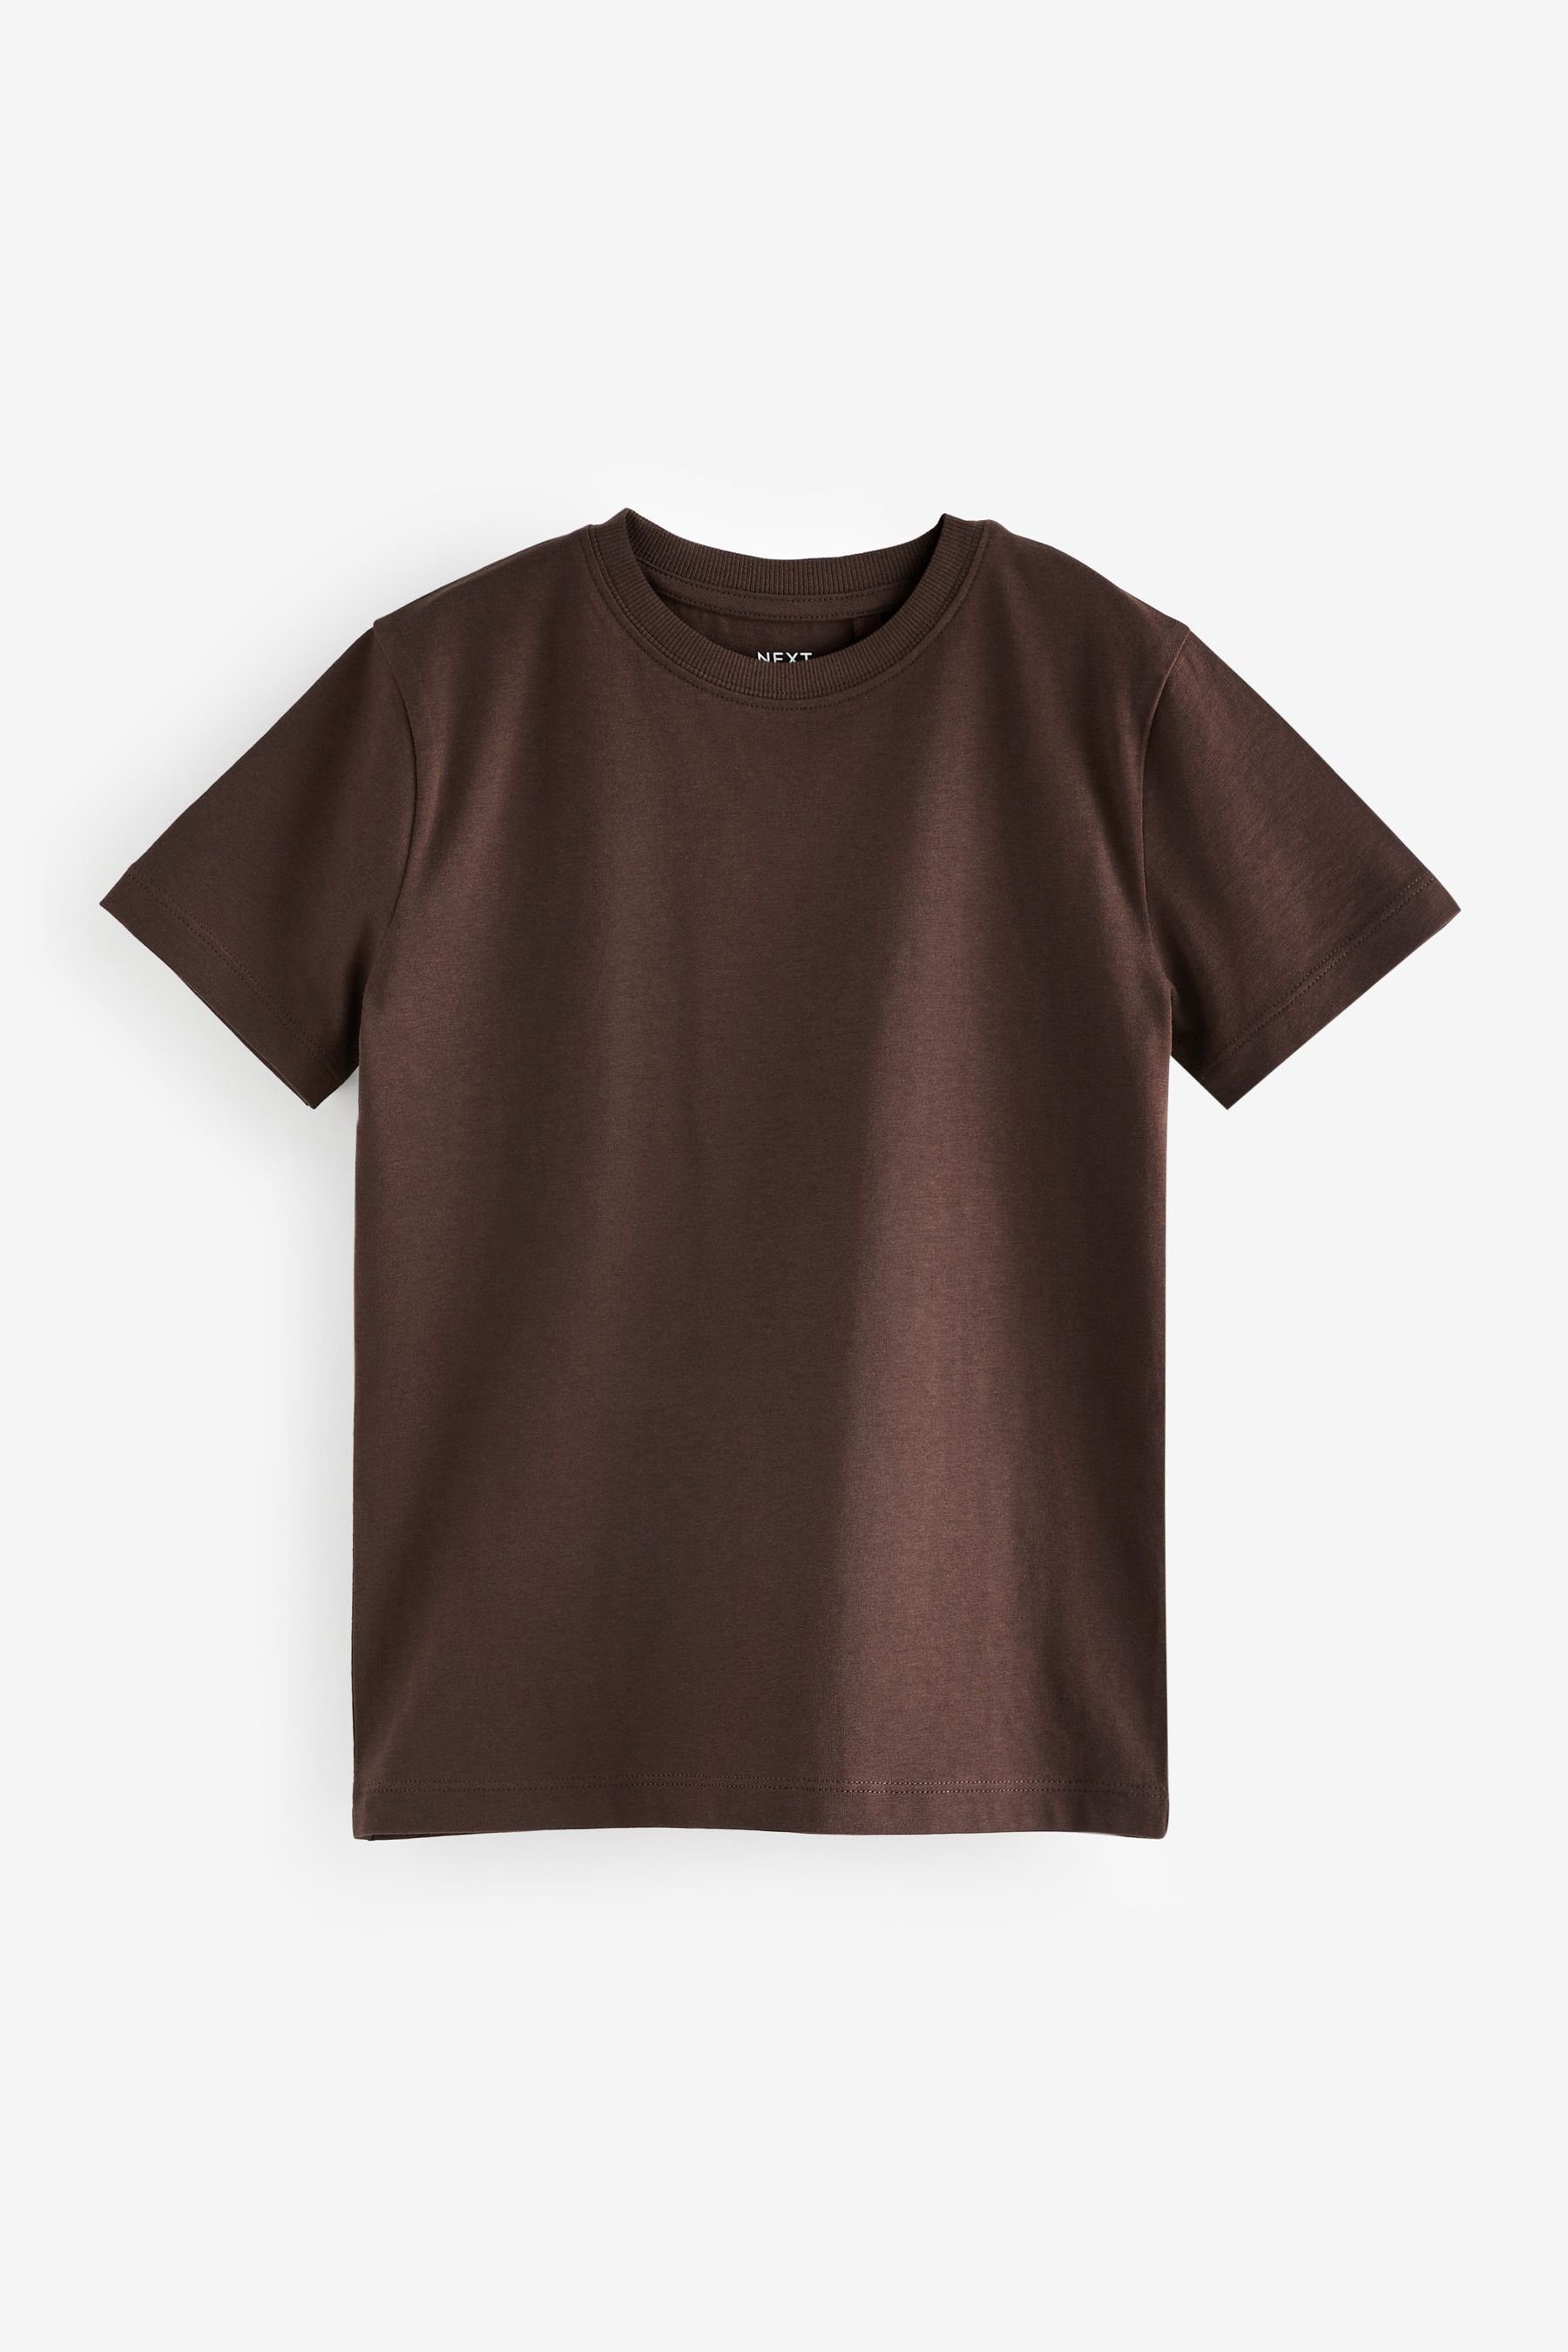 (1-tlg) Next Brown T-Shirt Chocolate T-Shirt